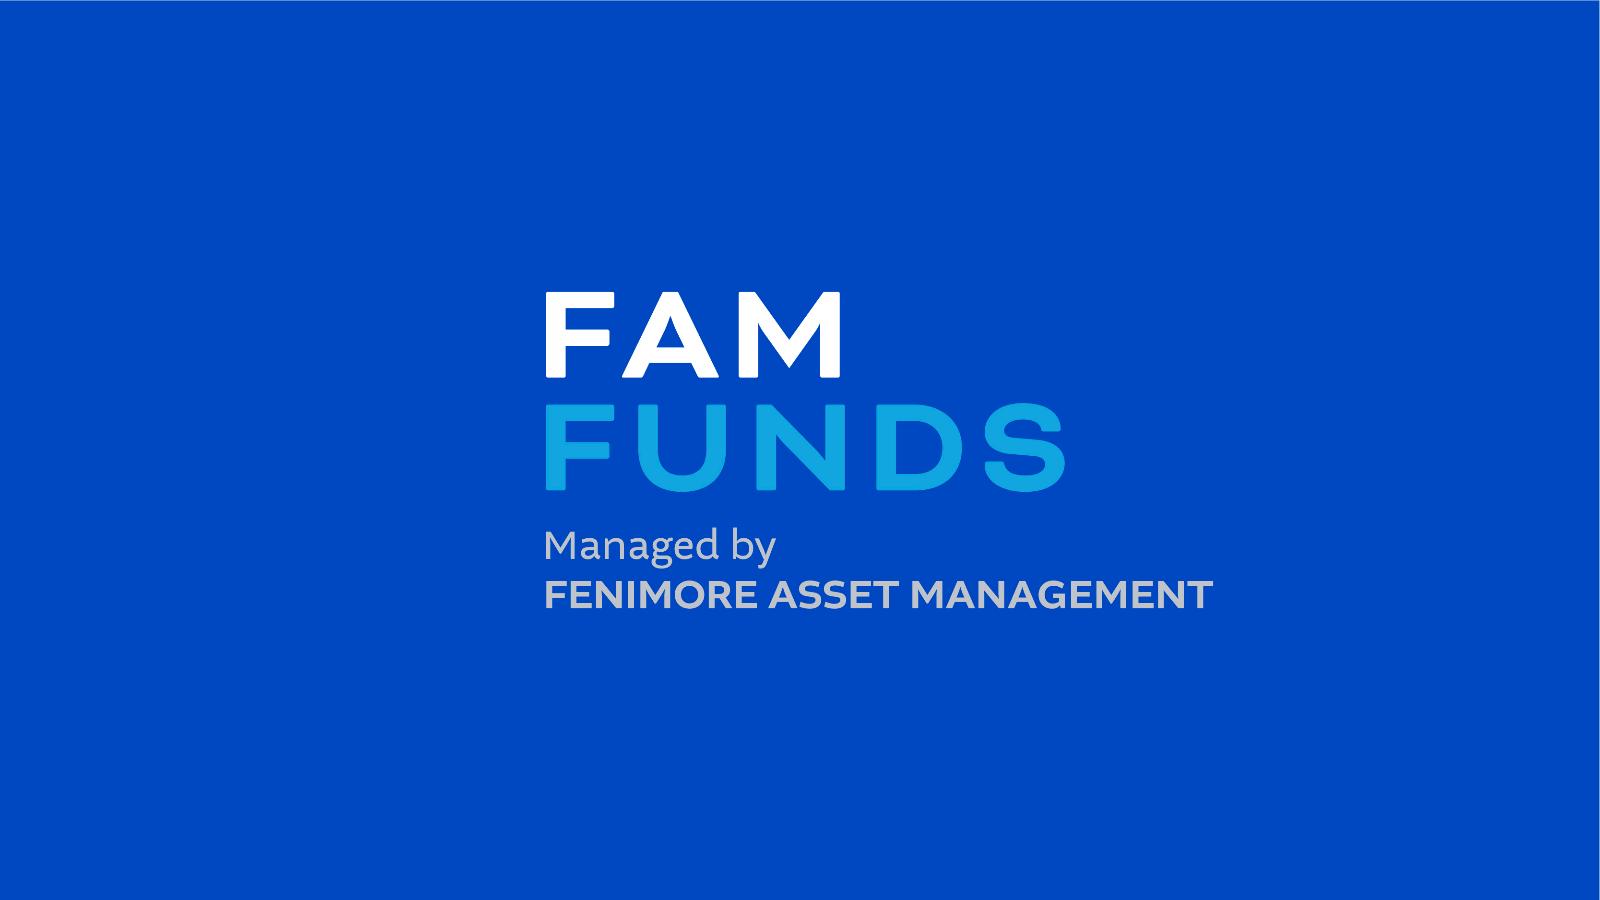 Fenimore Asset Management | FAM Funds Logo on dark